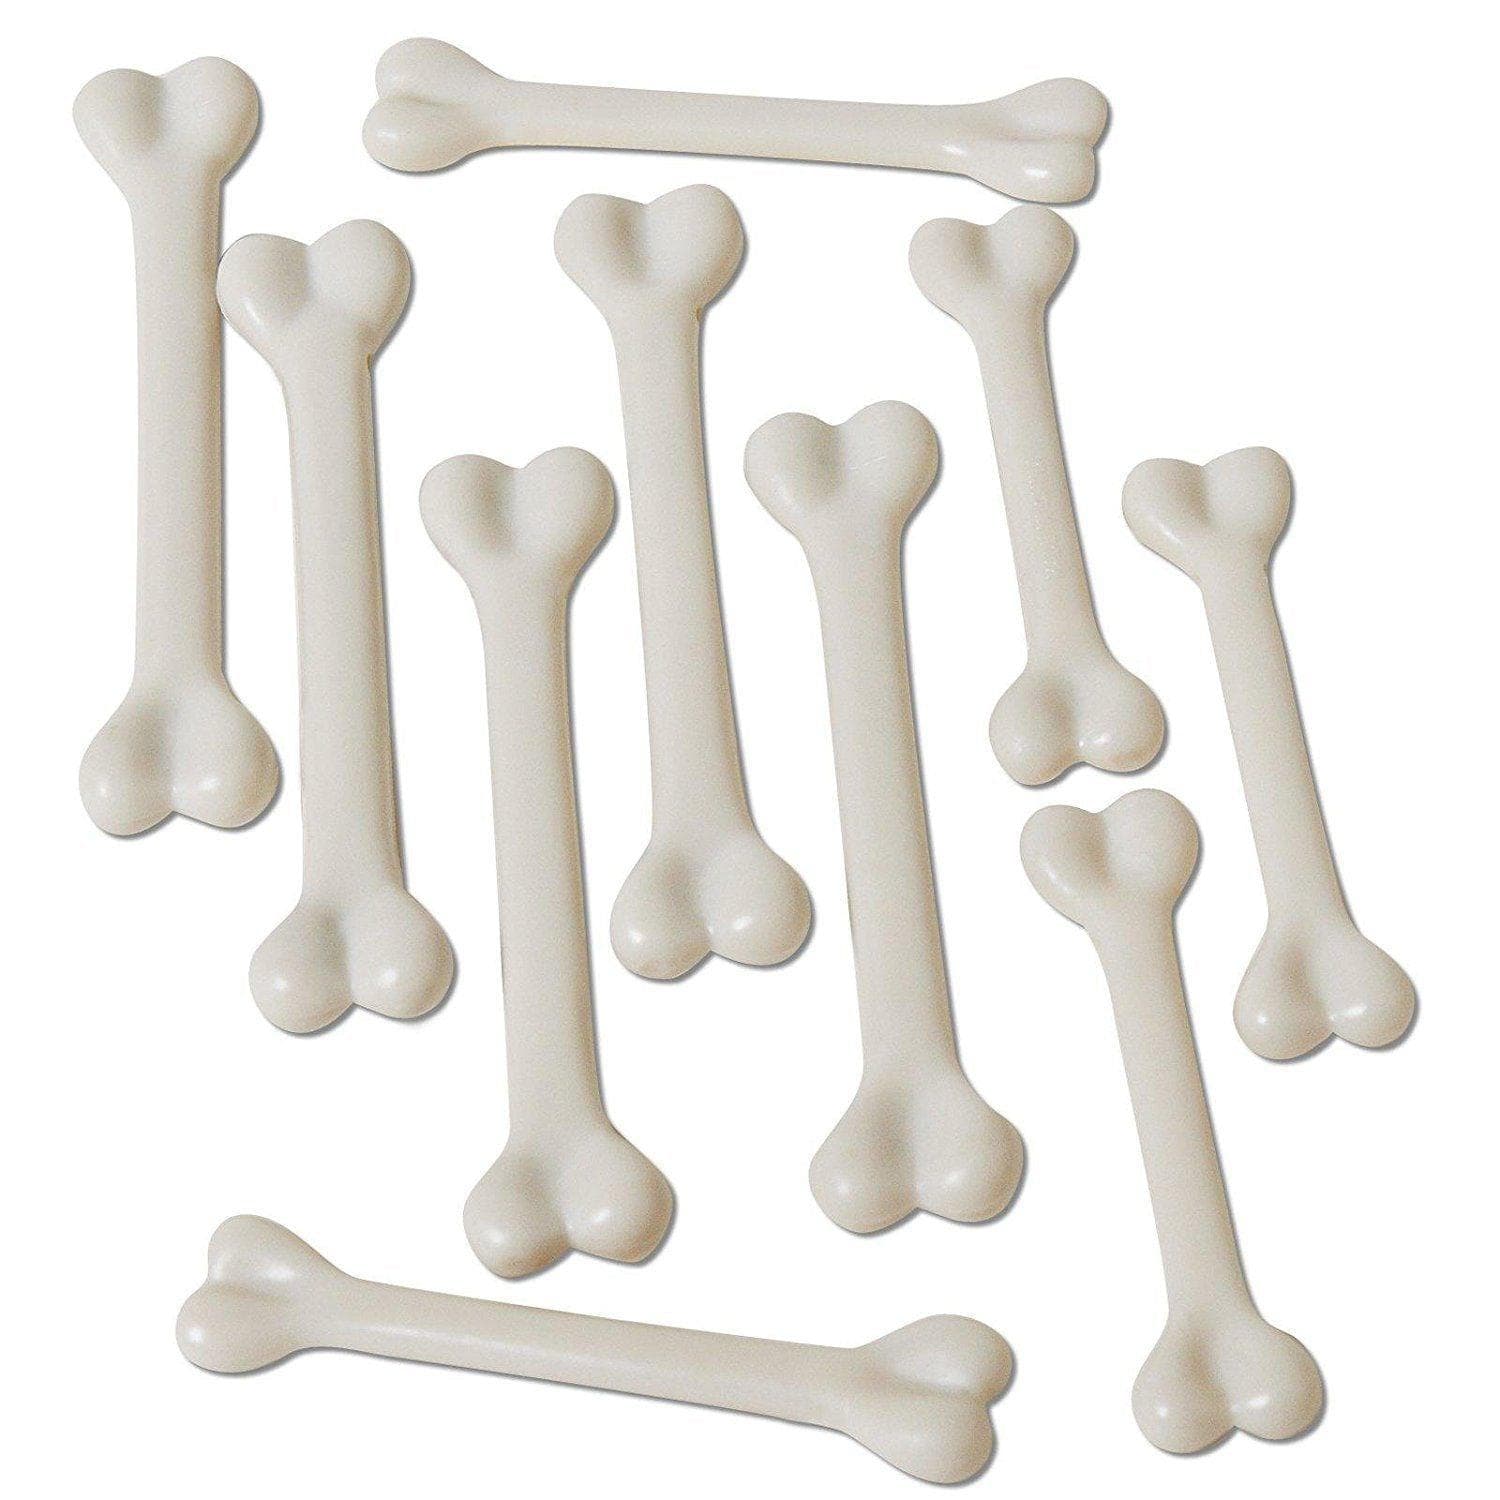 10 Piece Set of Bones - costumes.com